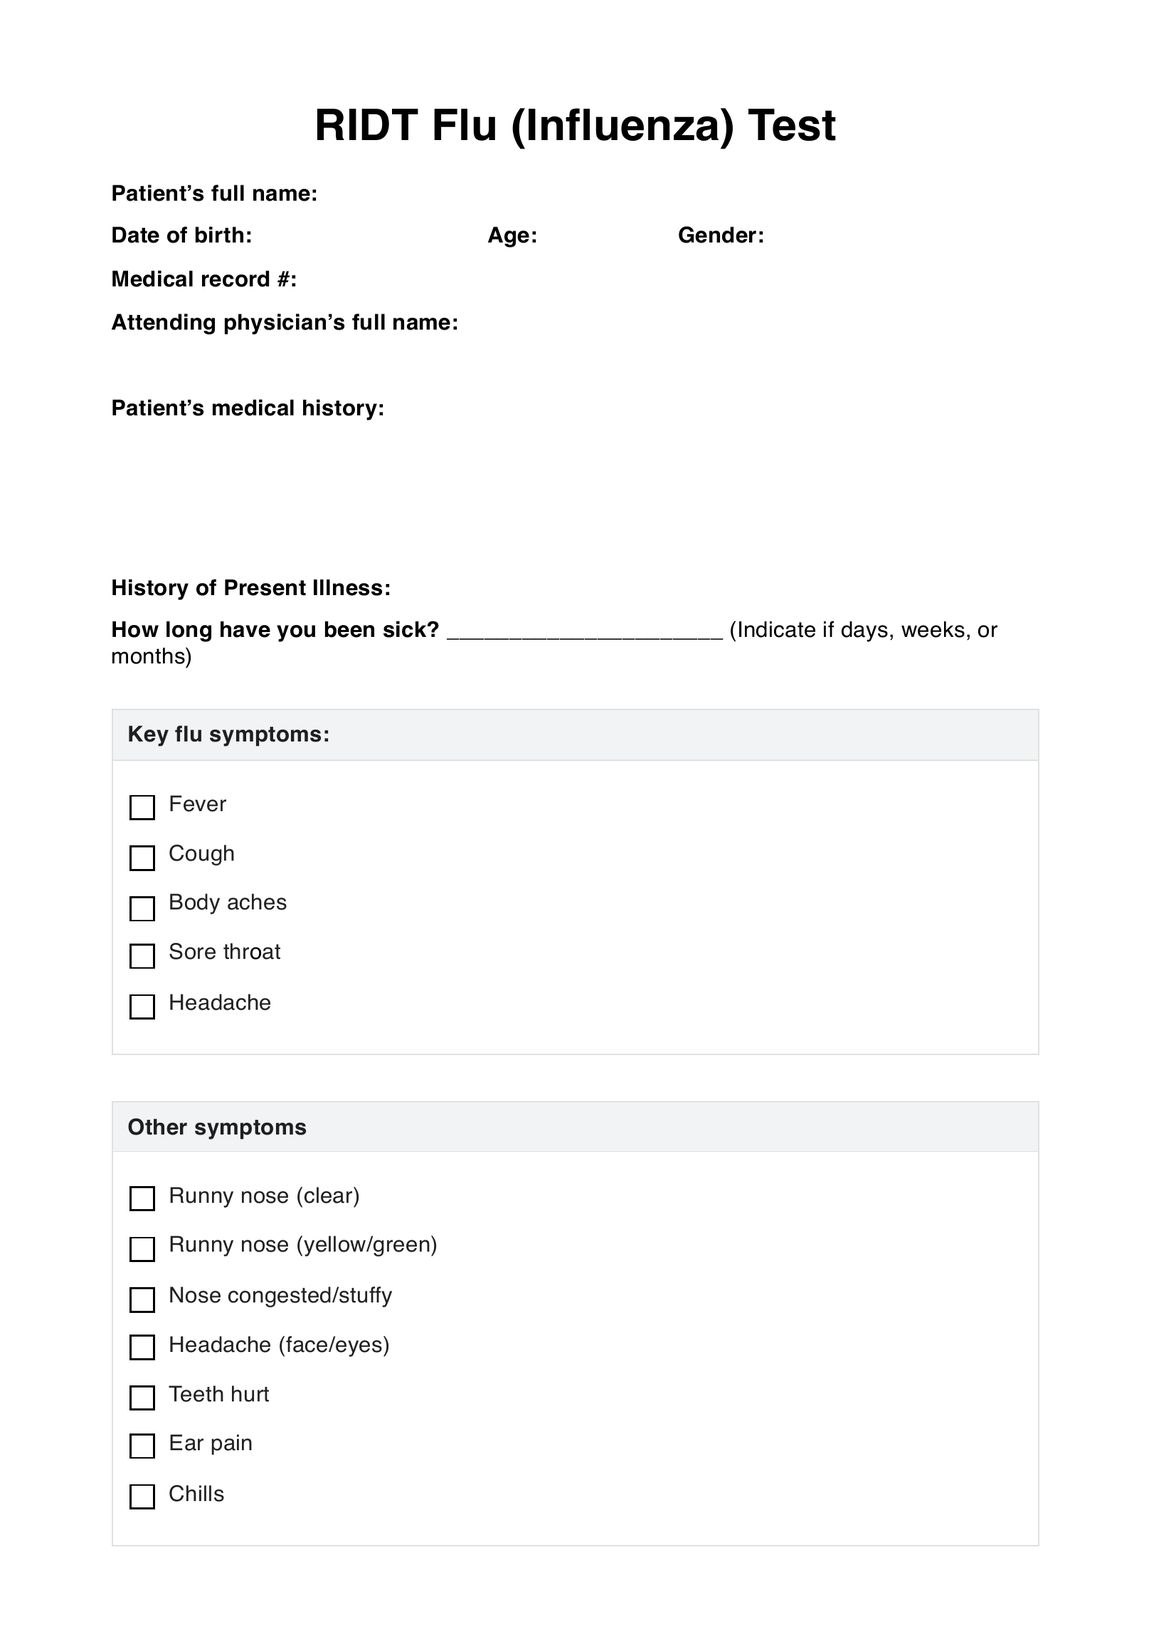 Flu (Influenza) Test - RITD PDF Example